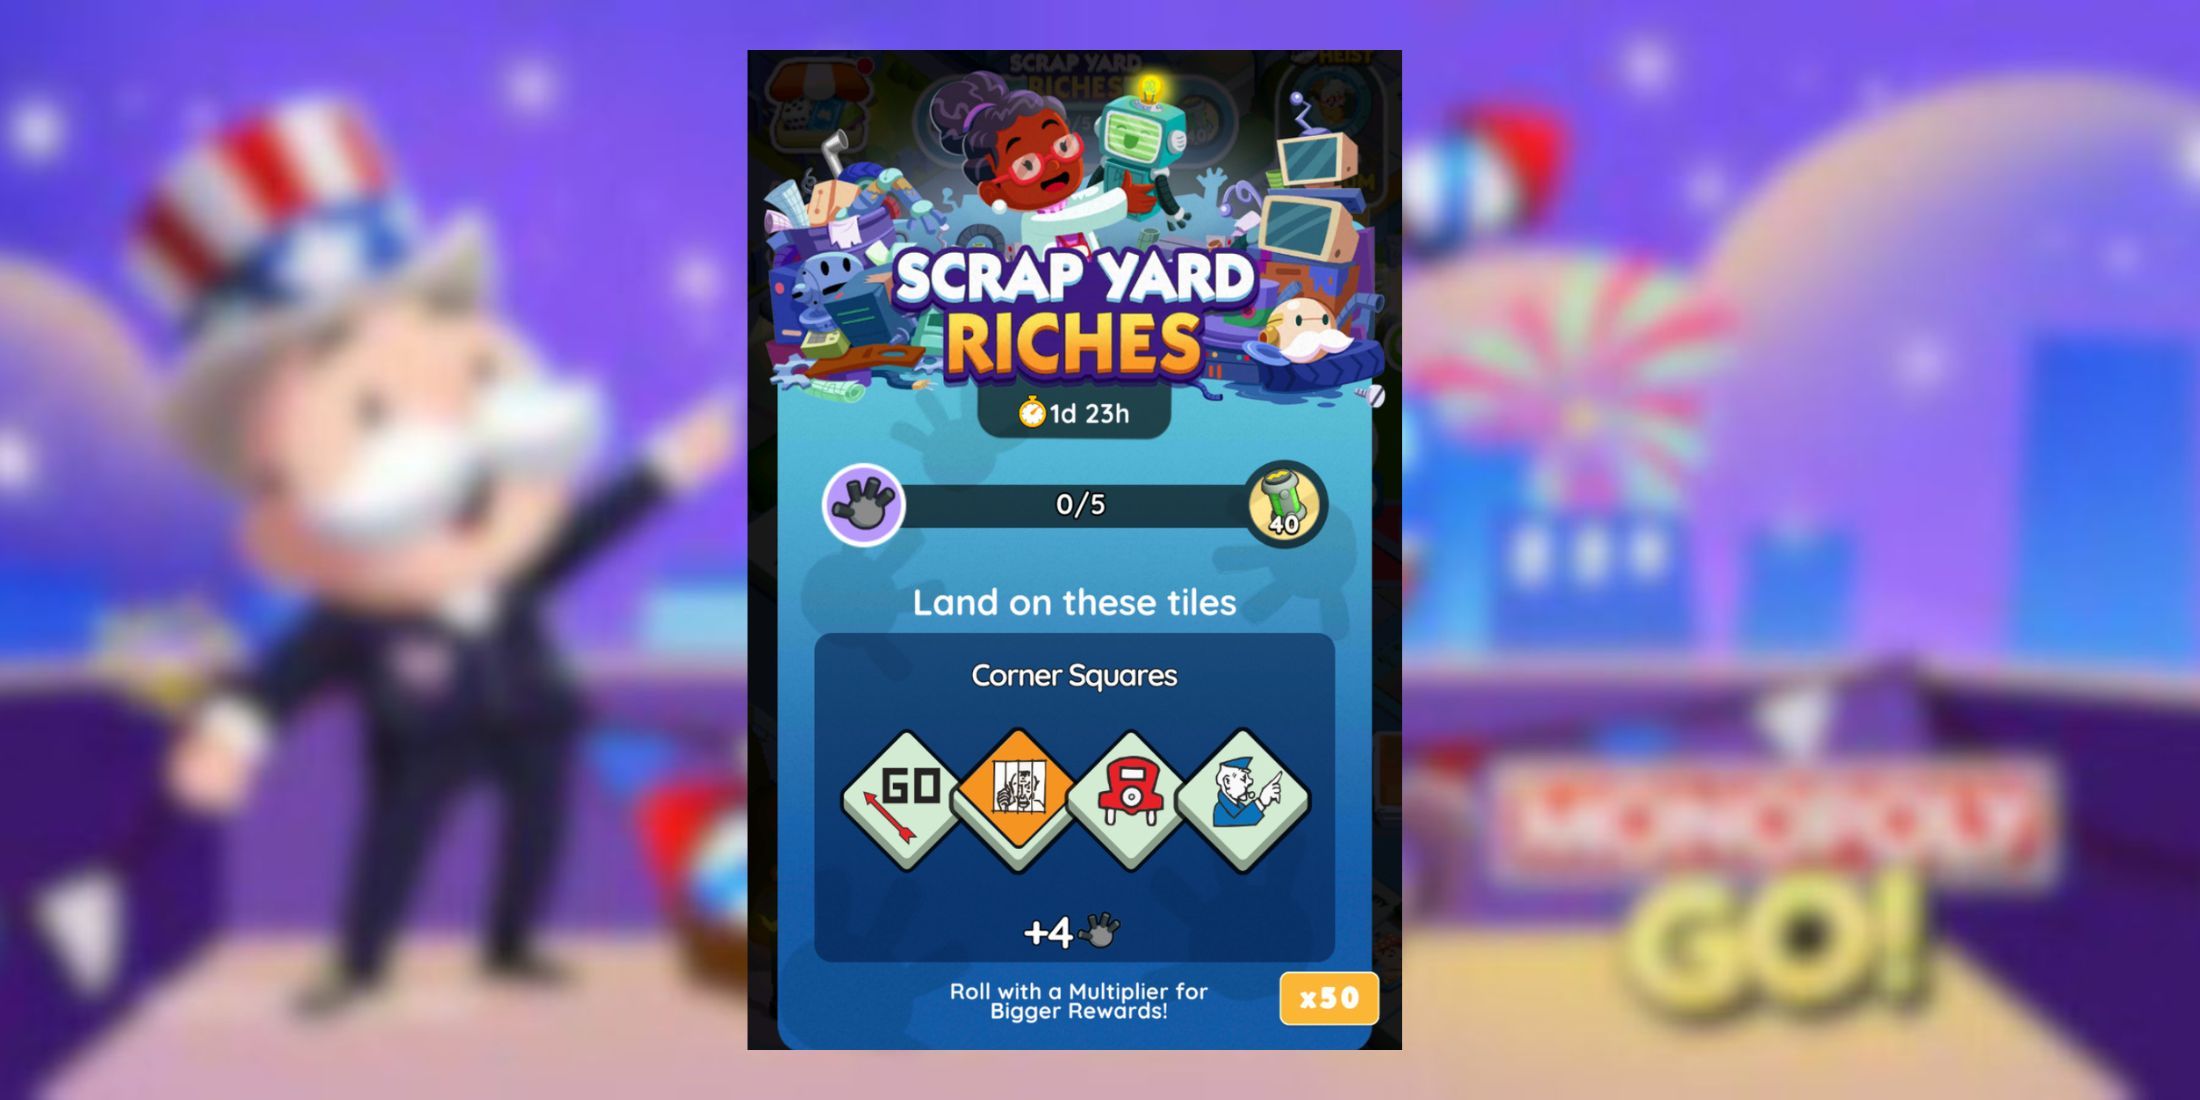 scrap yard riches rewards monopoly go